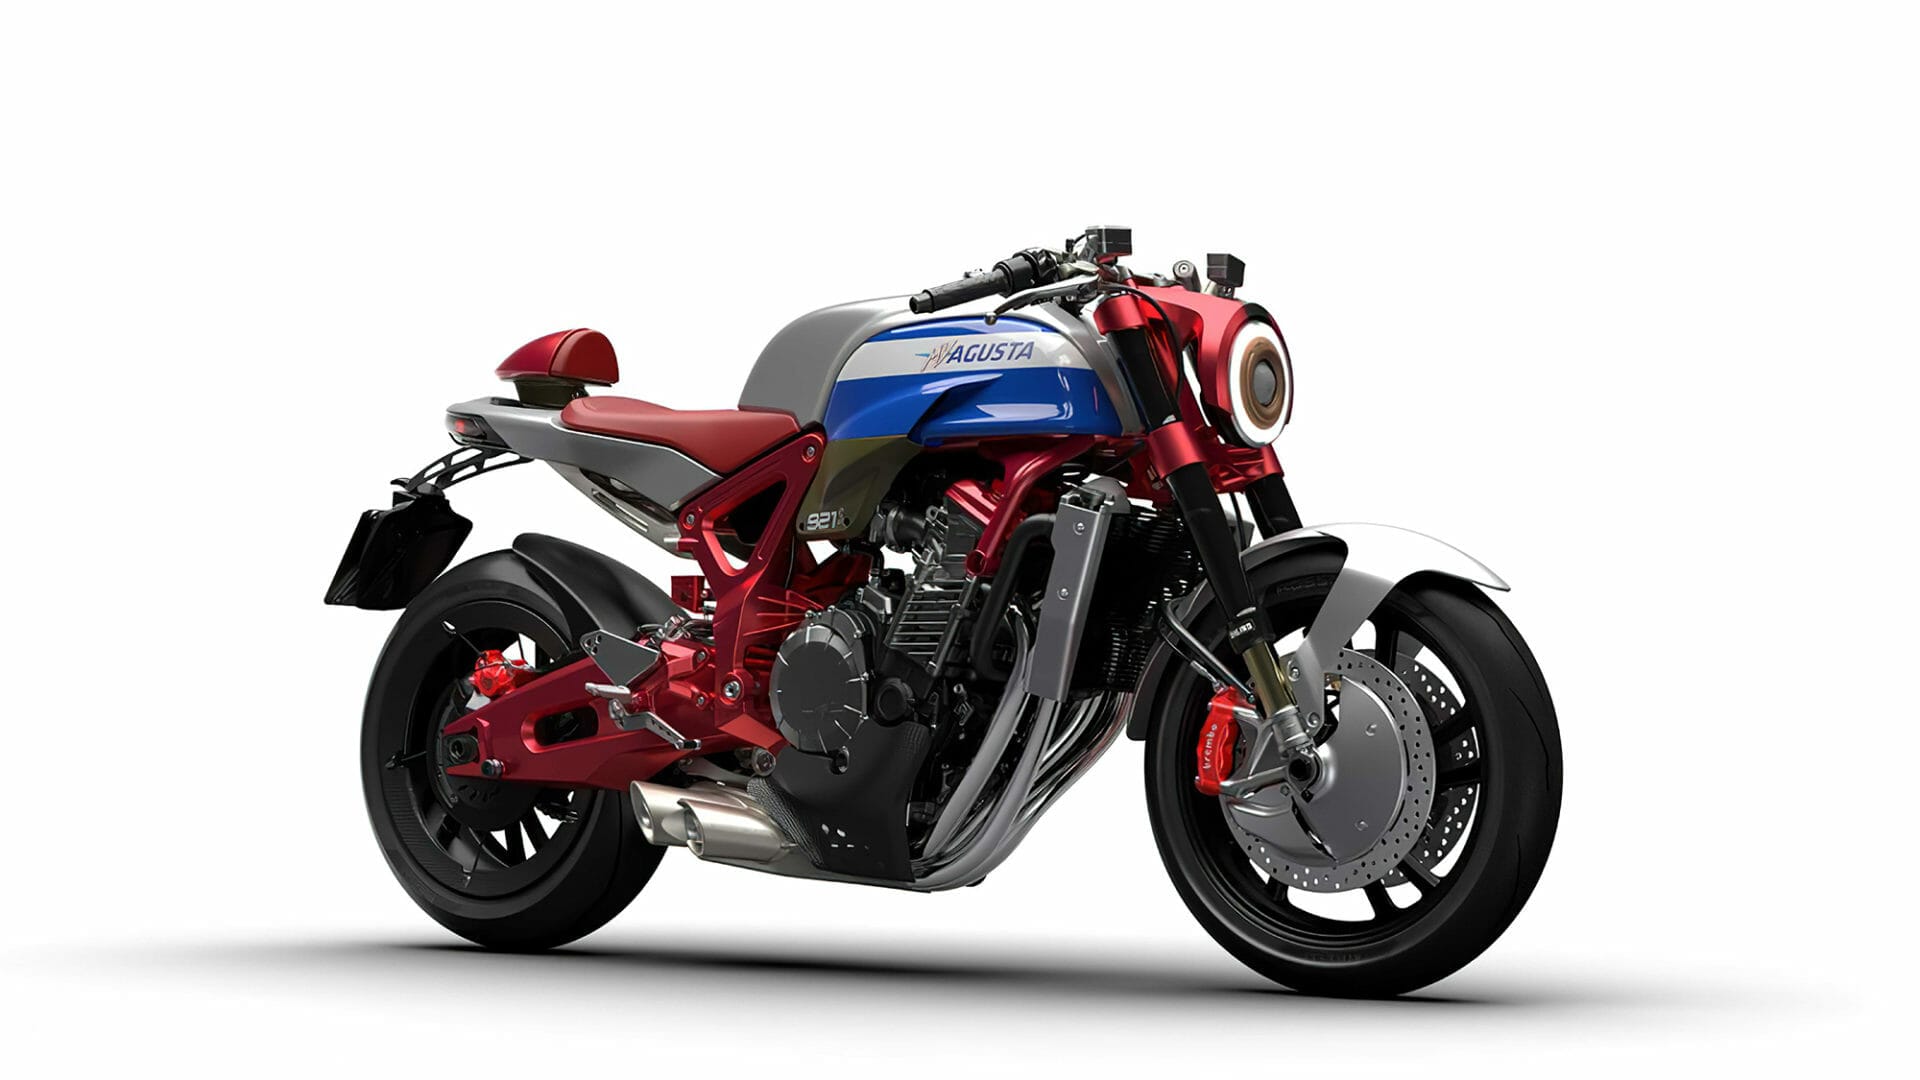 Radical NakedBike - MV Agusta 921S Concept - MOTORCYCLES.NEWS